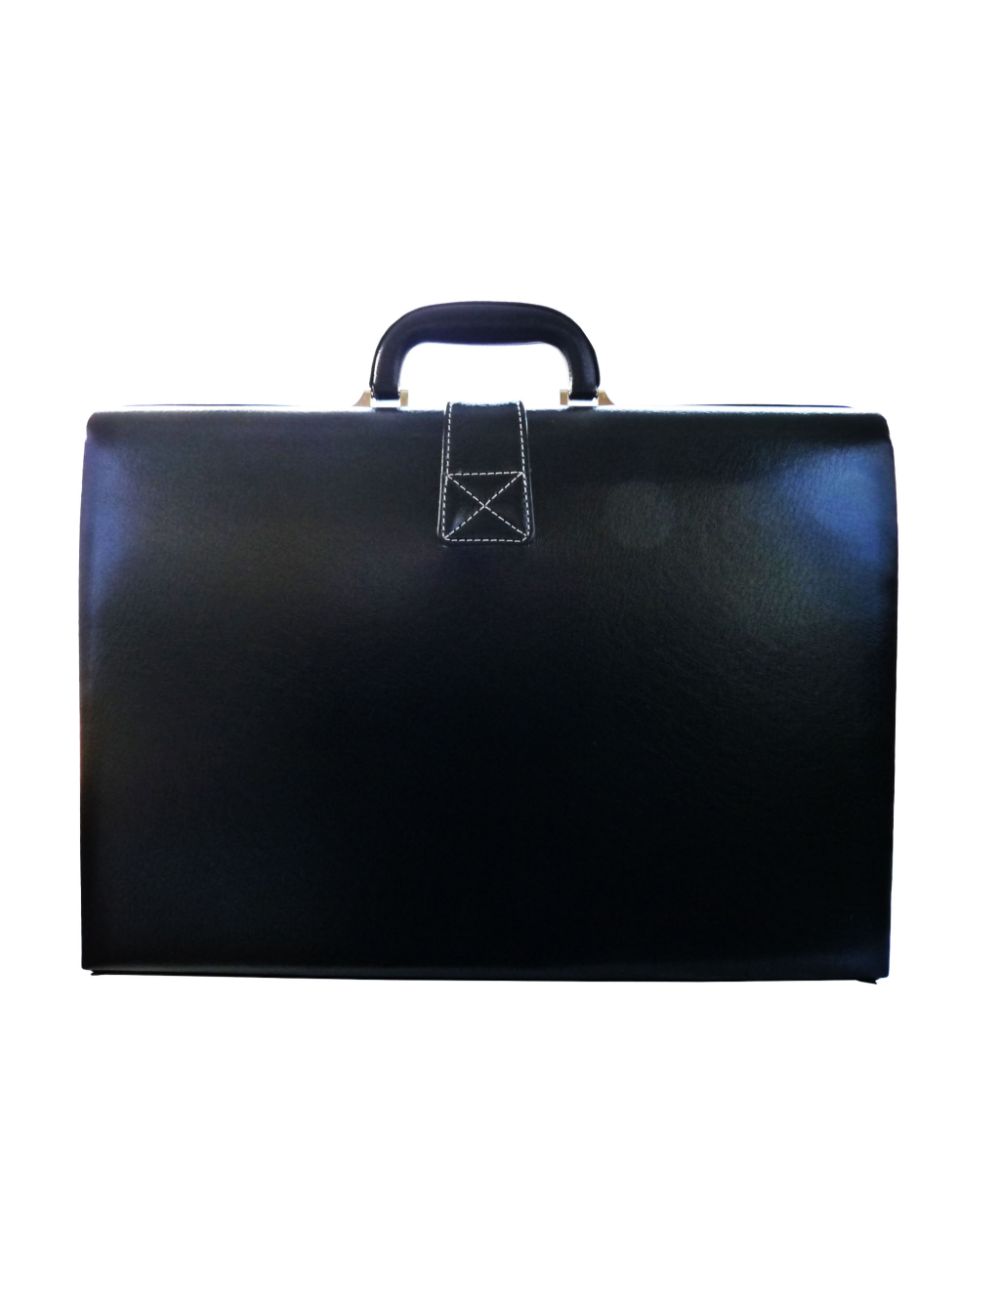 Roamlite Executive Briefcase Black Pu Leather RL919  front 2